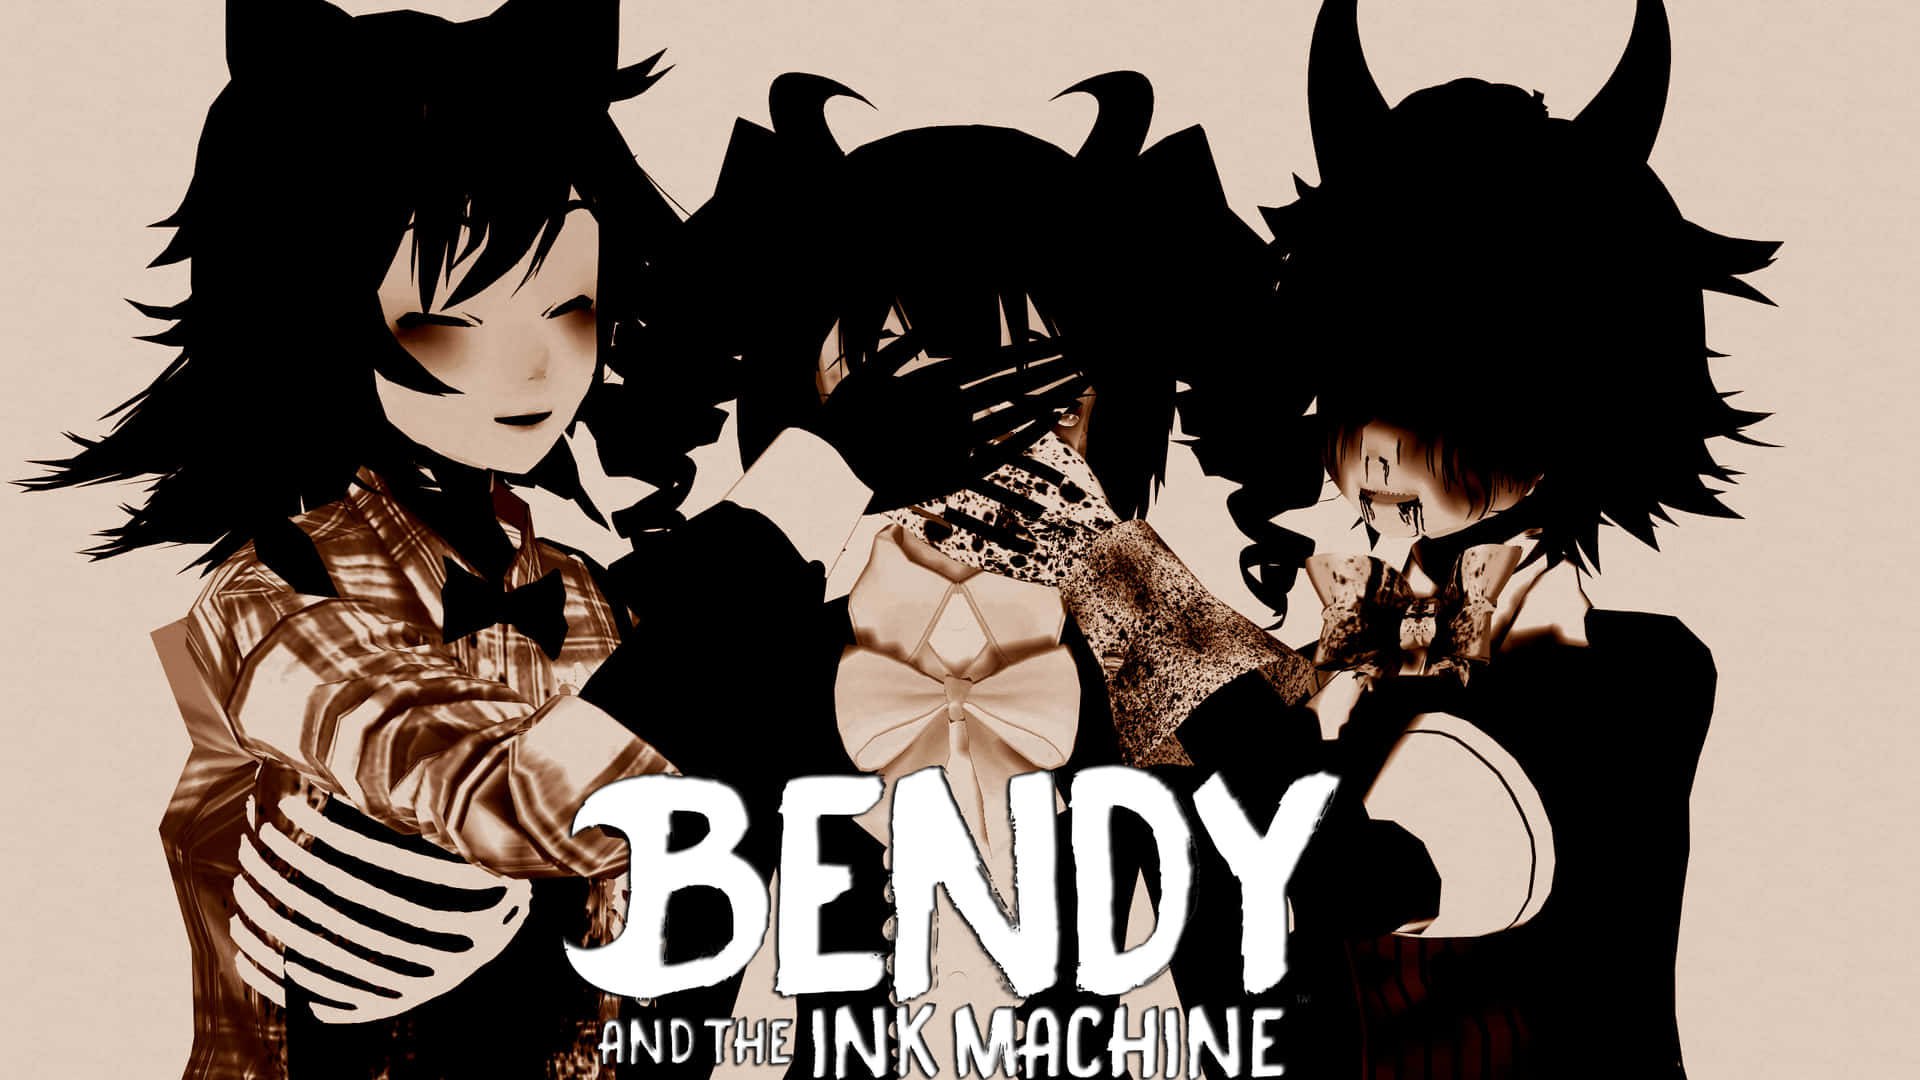 Bendy And The Ink Machine Digital Art Wallpaper